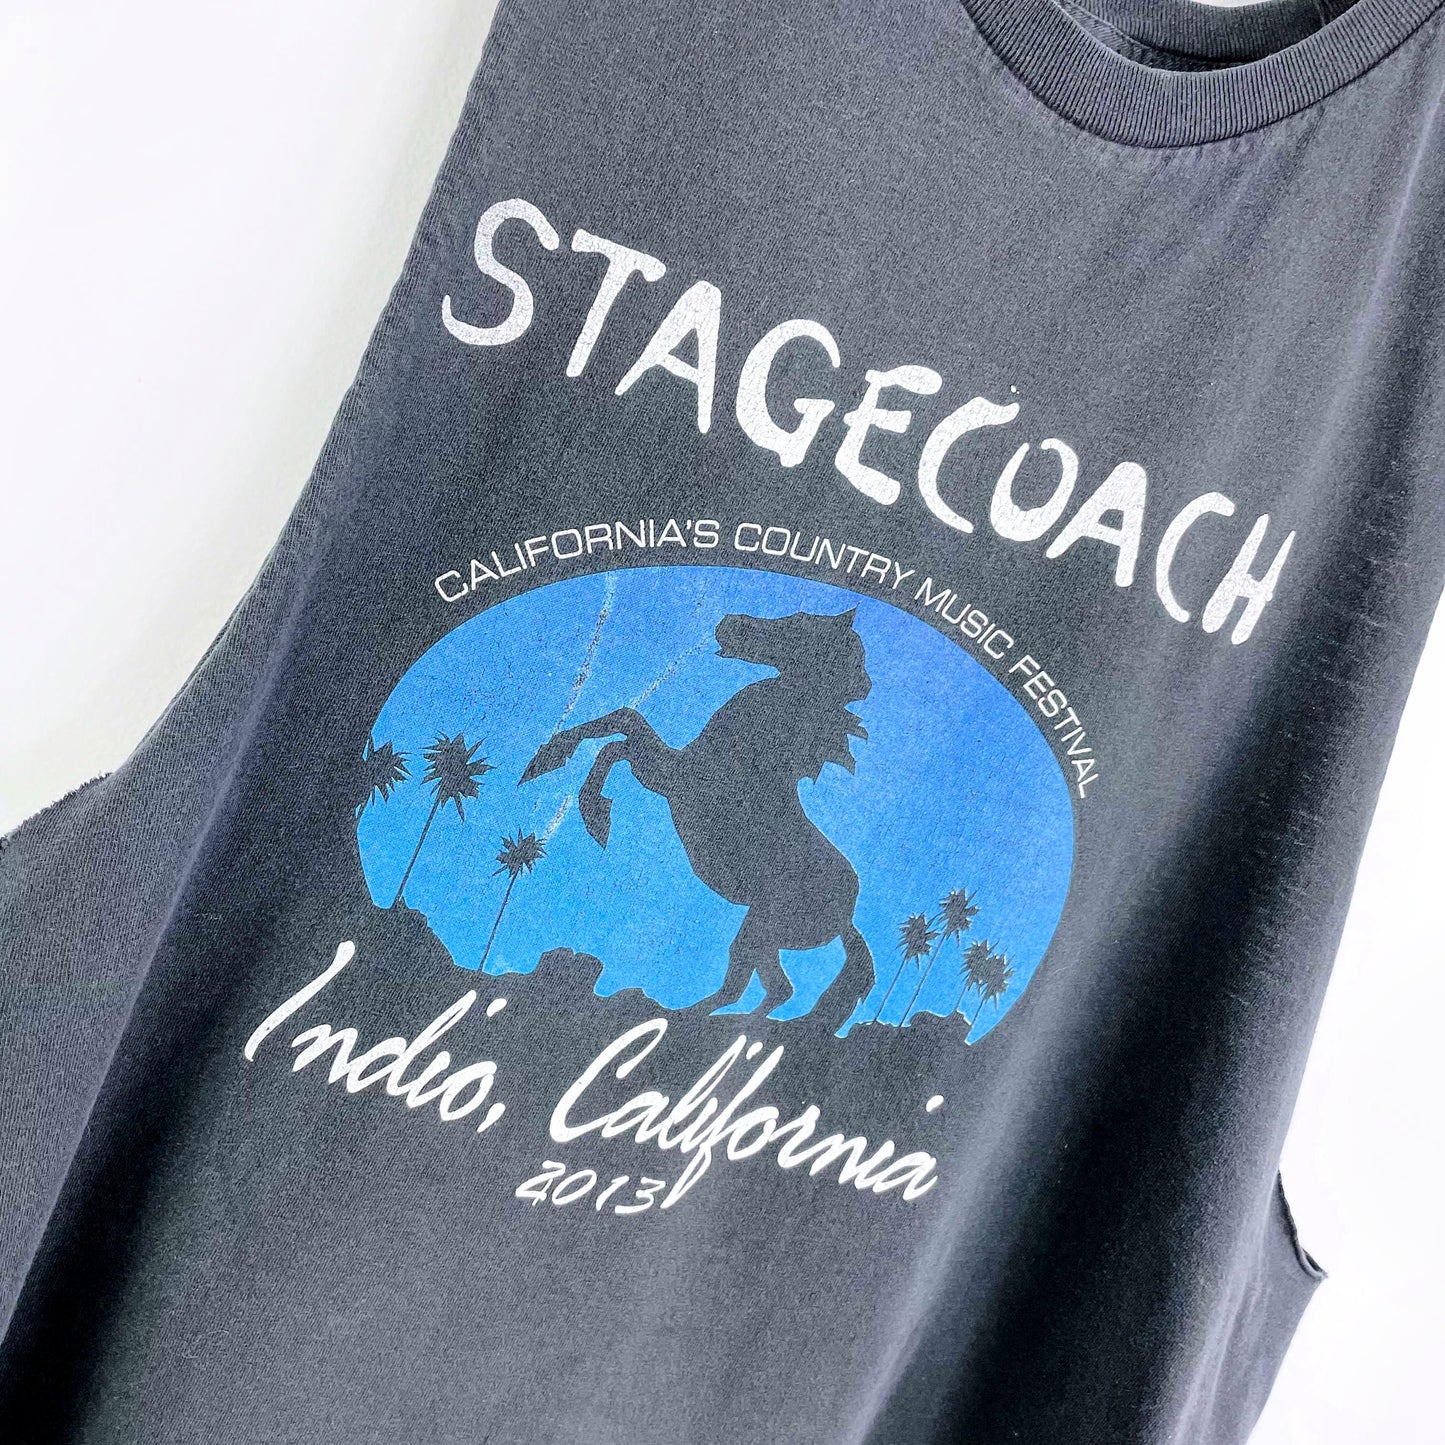 2013 stagecoach festival california rework tank